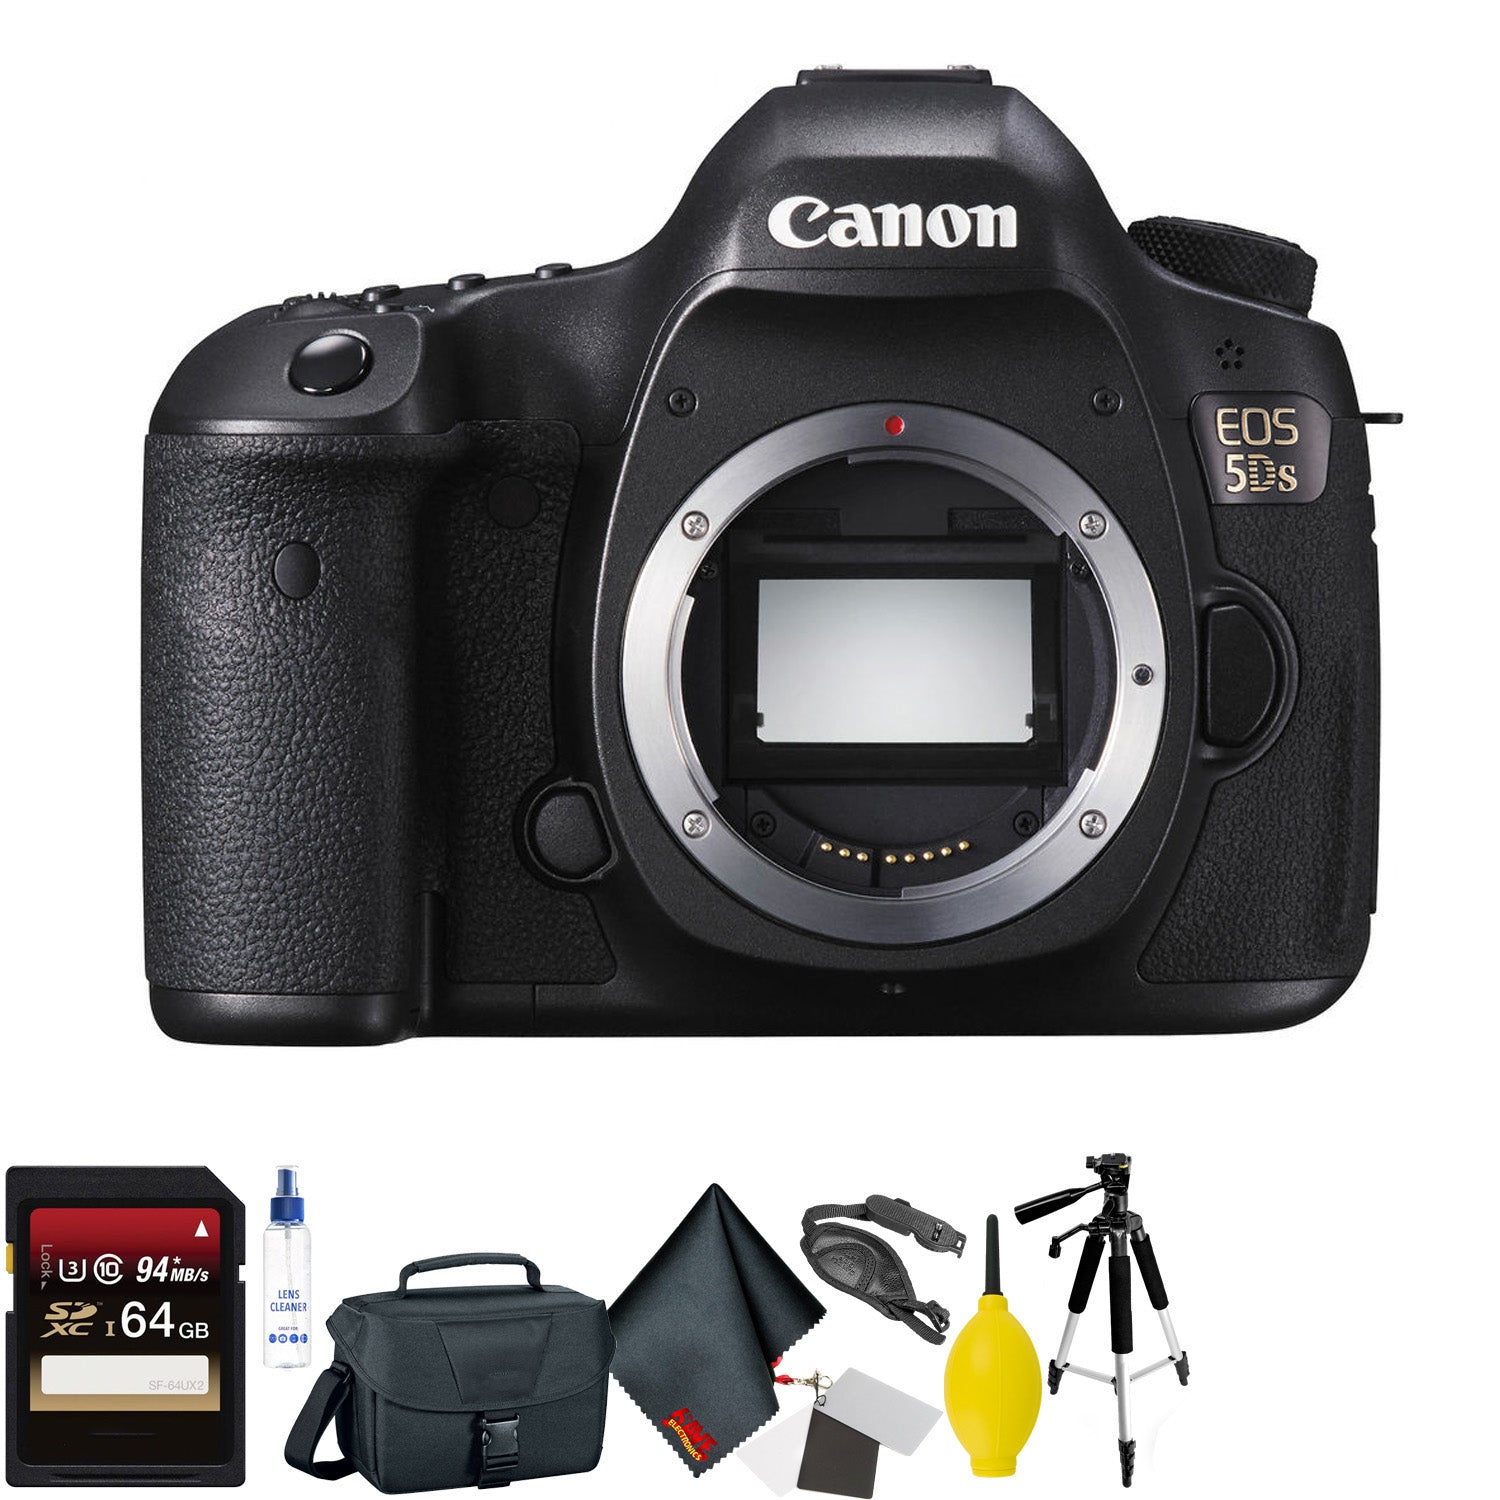 Canon EOS 5DS DSLR Camera (Body Only) + 64GB Memory Card + Mega Accessory Kit + 1 Year Warranty